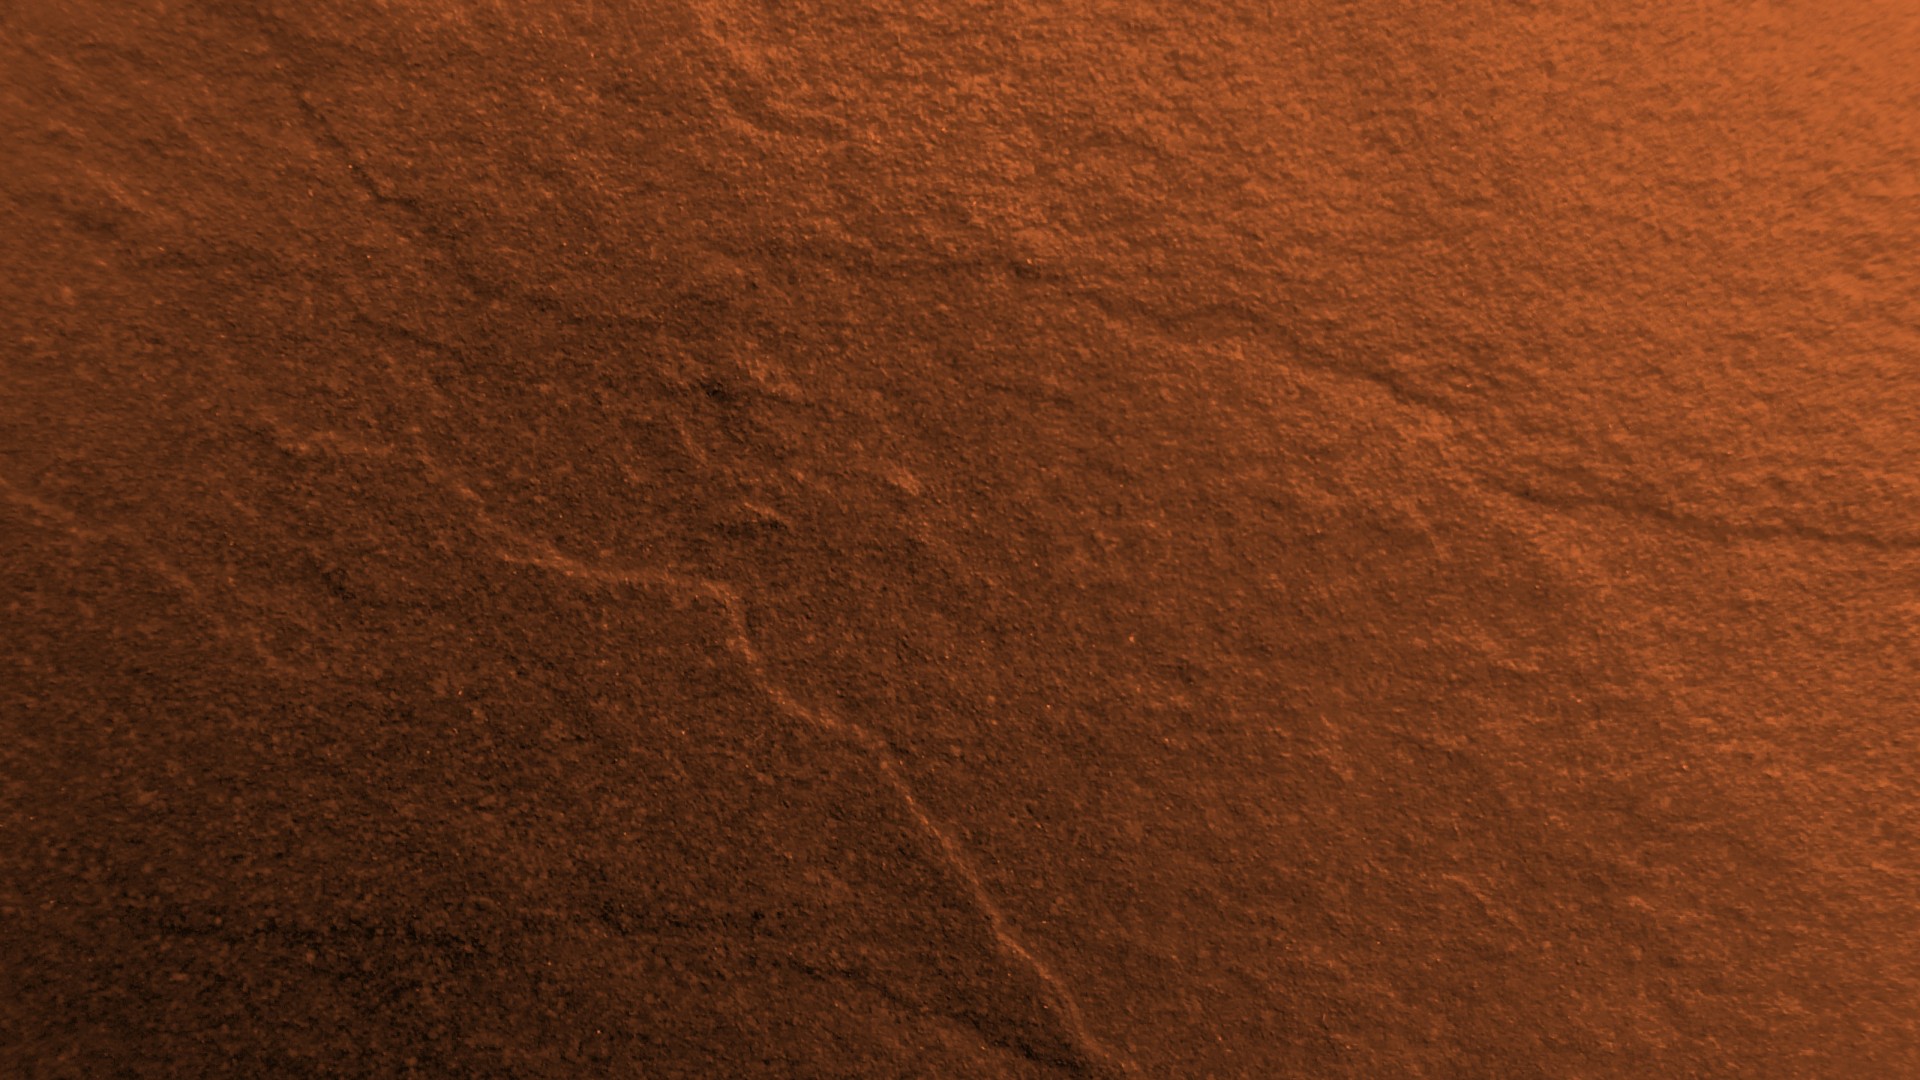 Sepia Stone Background